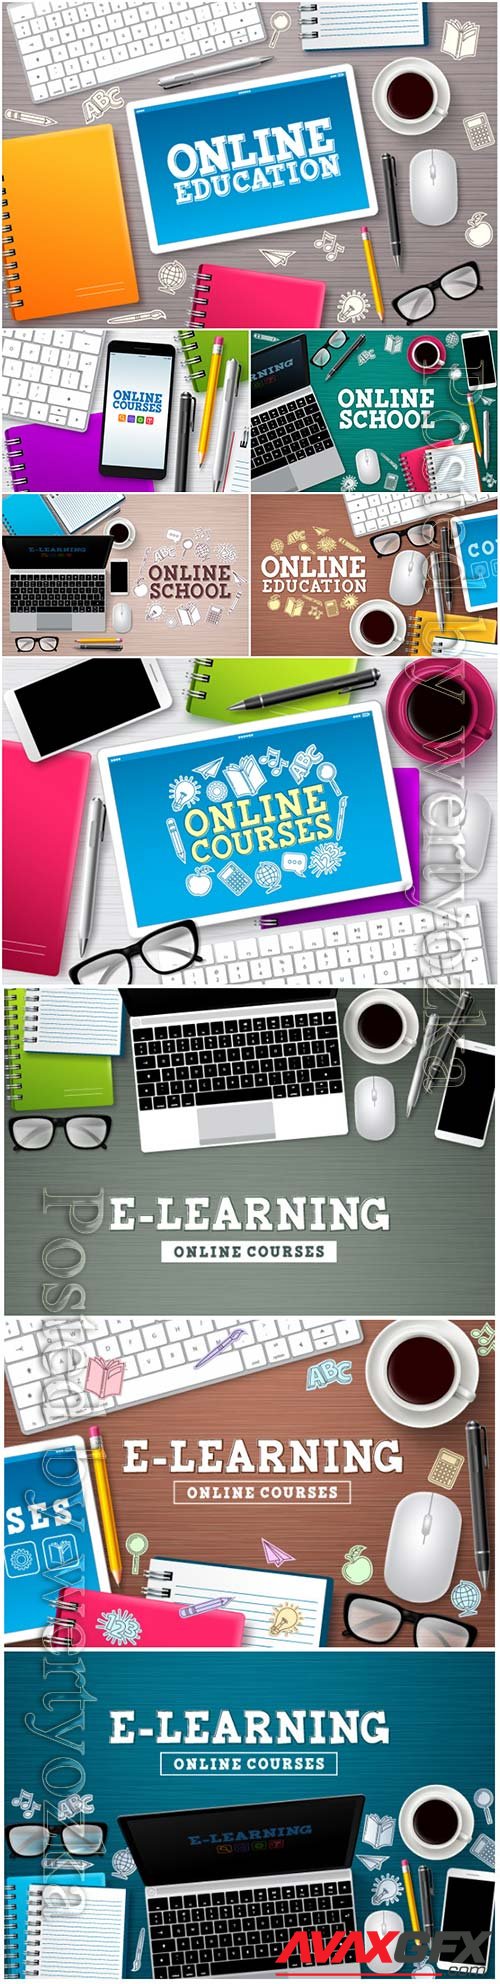 Online education elearning vector banner